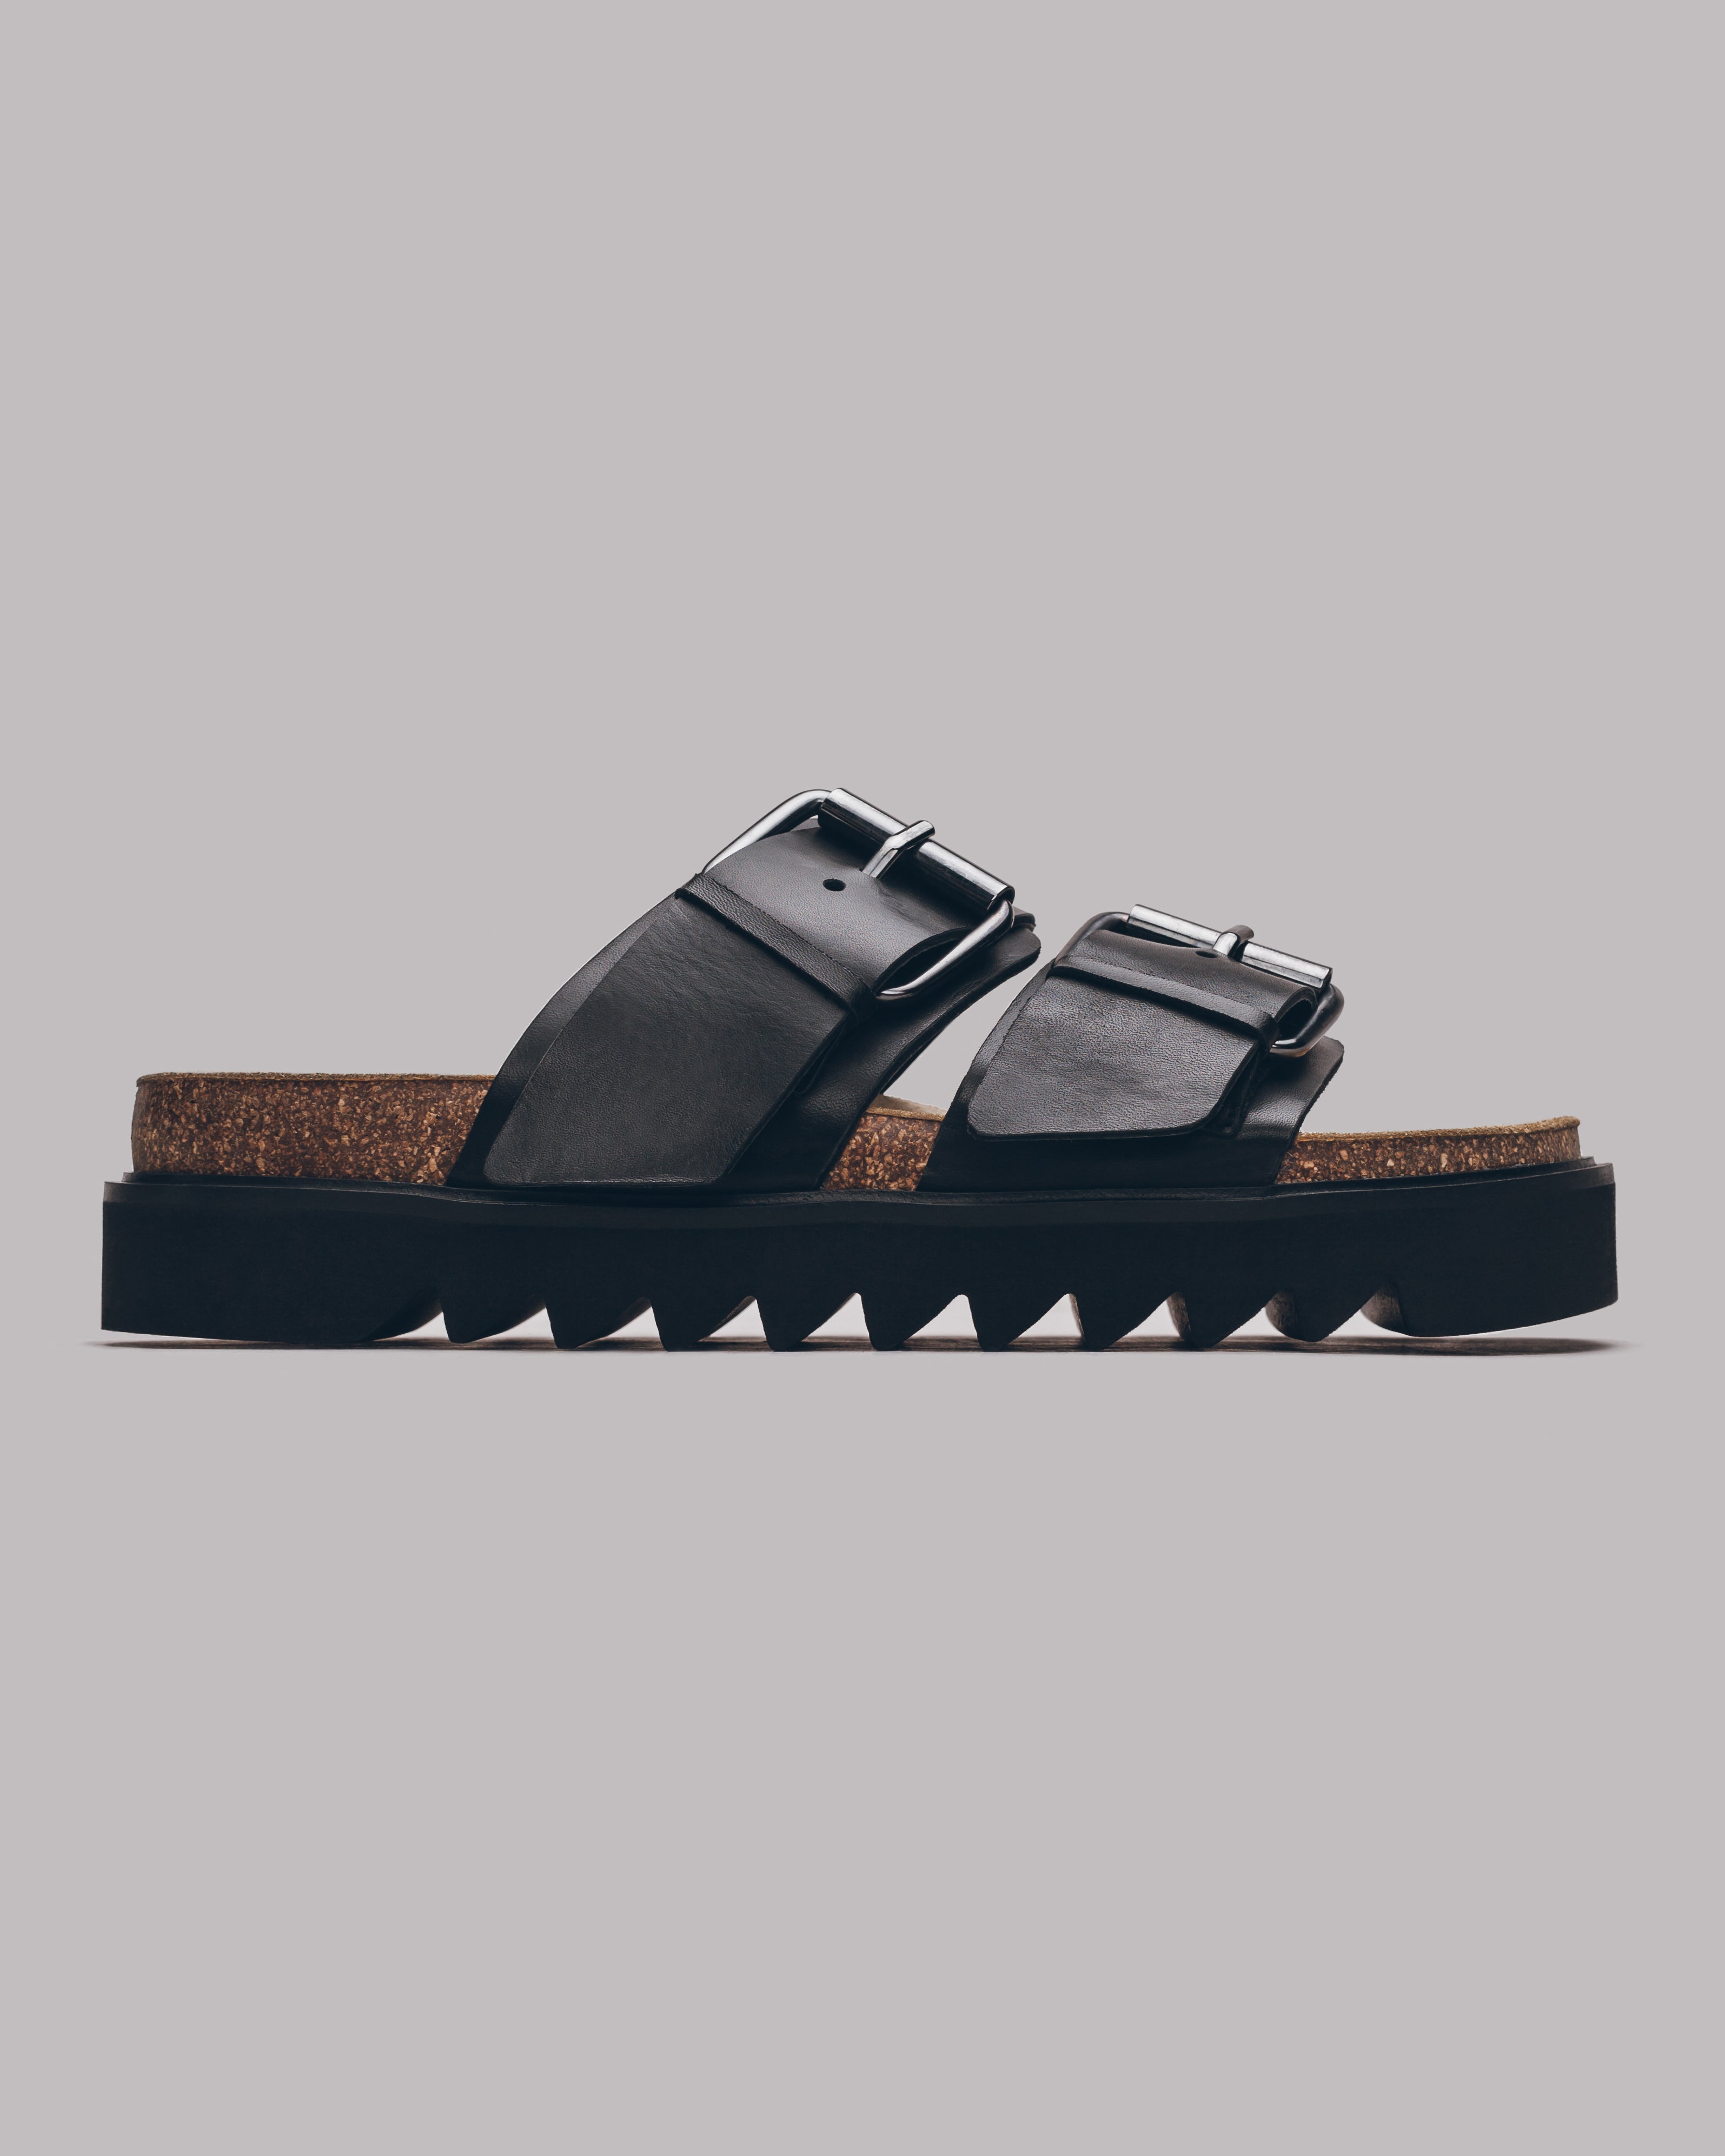 Buckle Strap - Black Leather Sandals